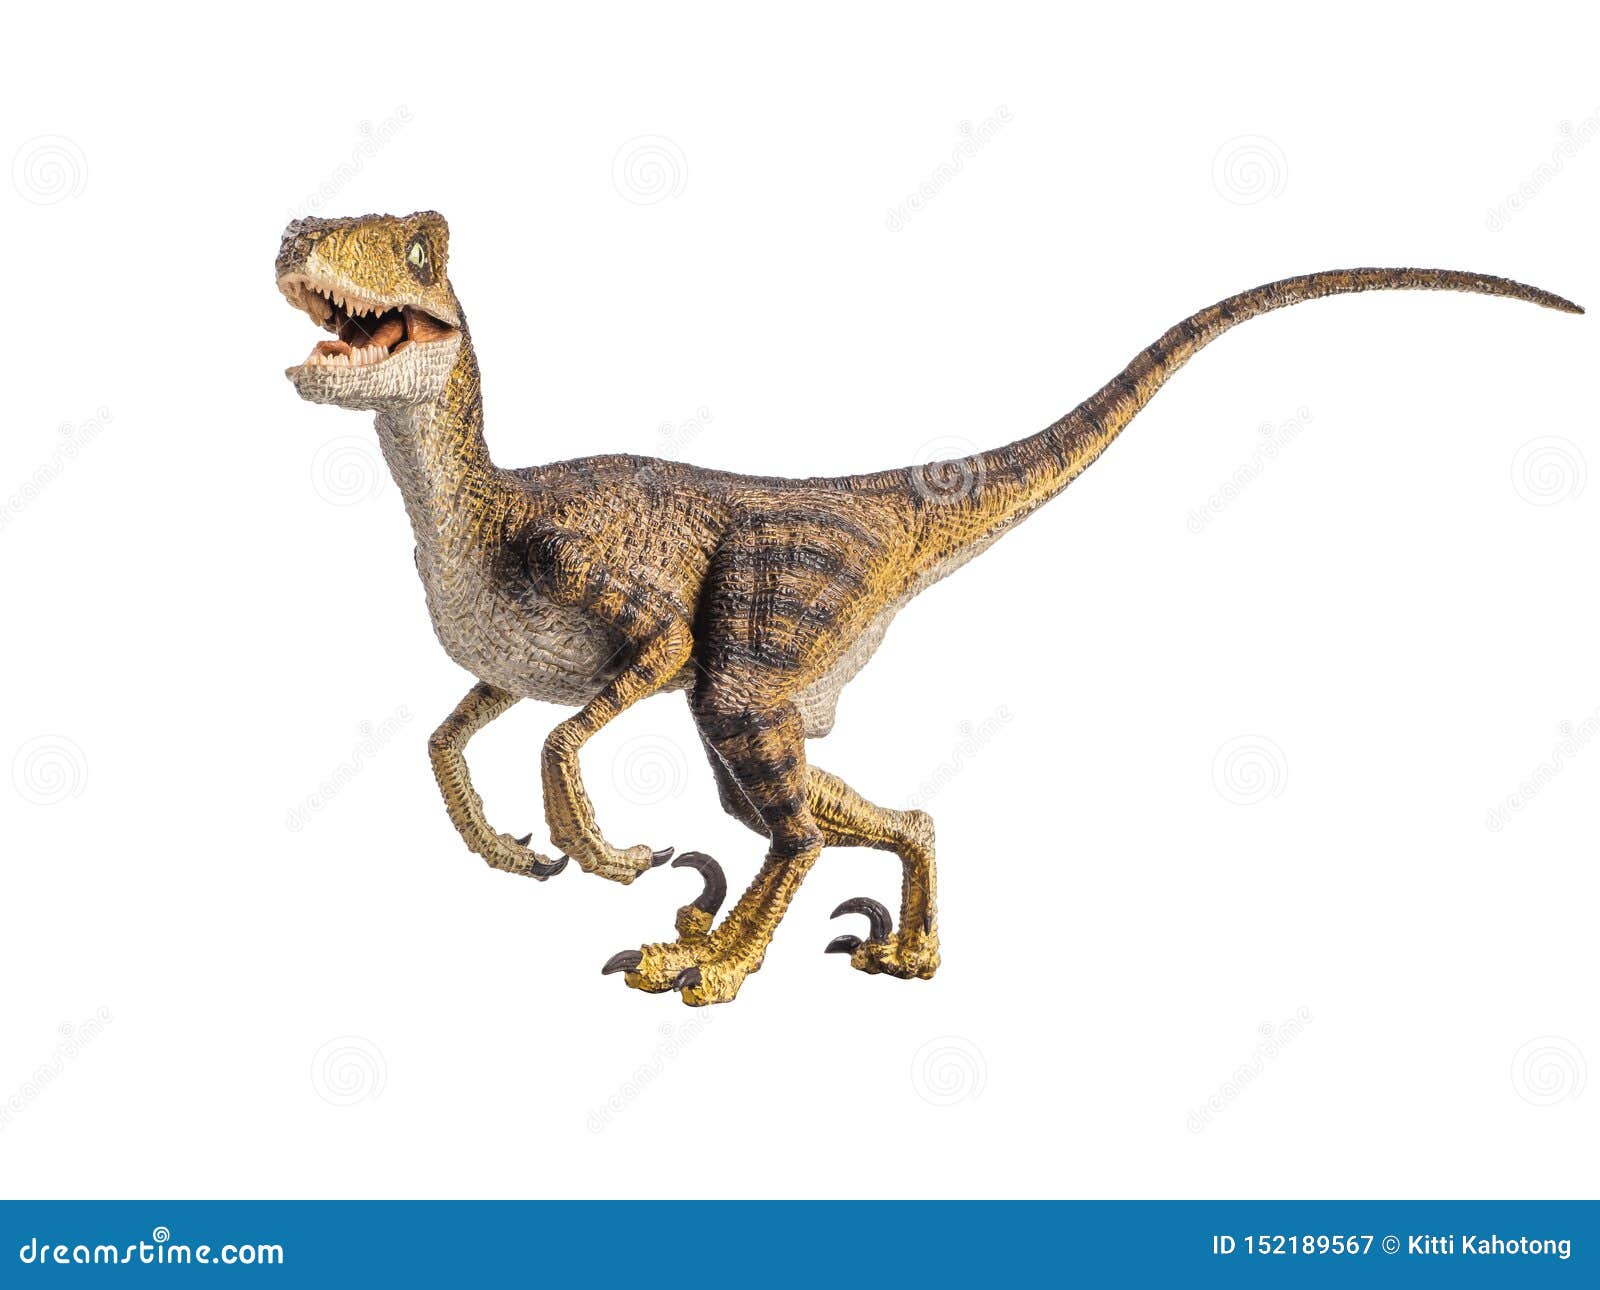 velociraptor dinosaur on white background